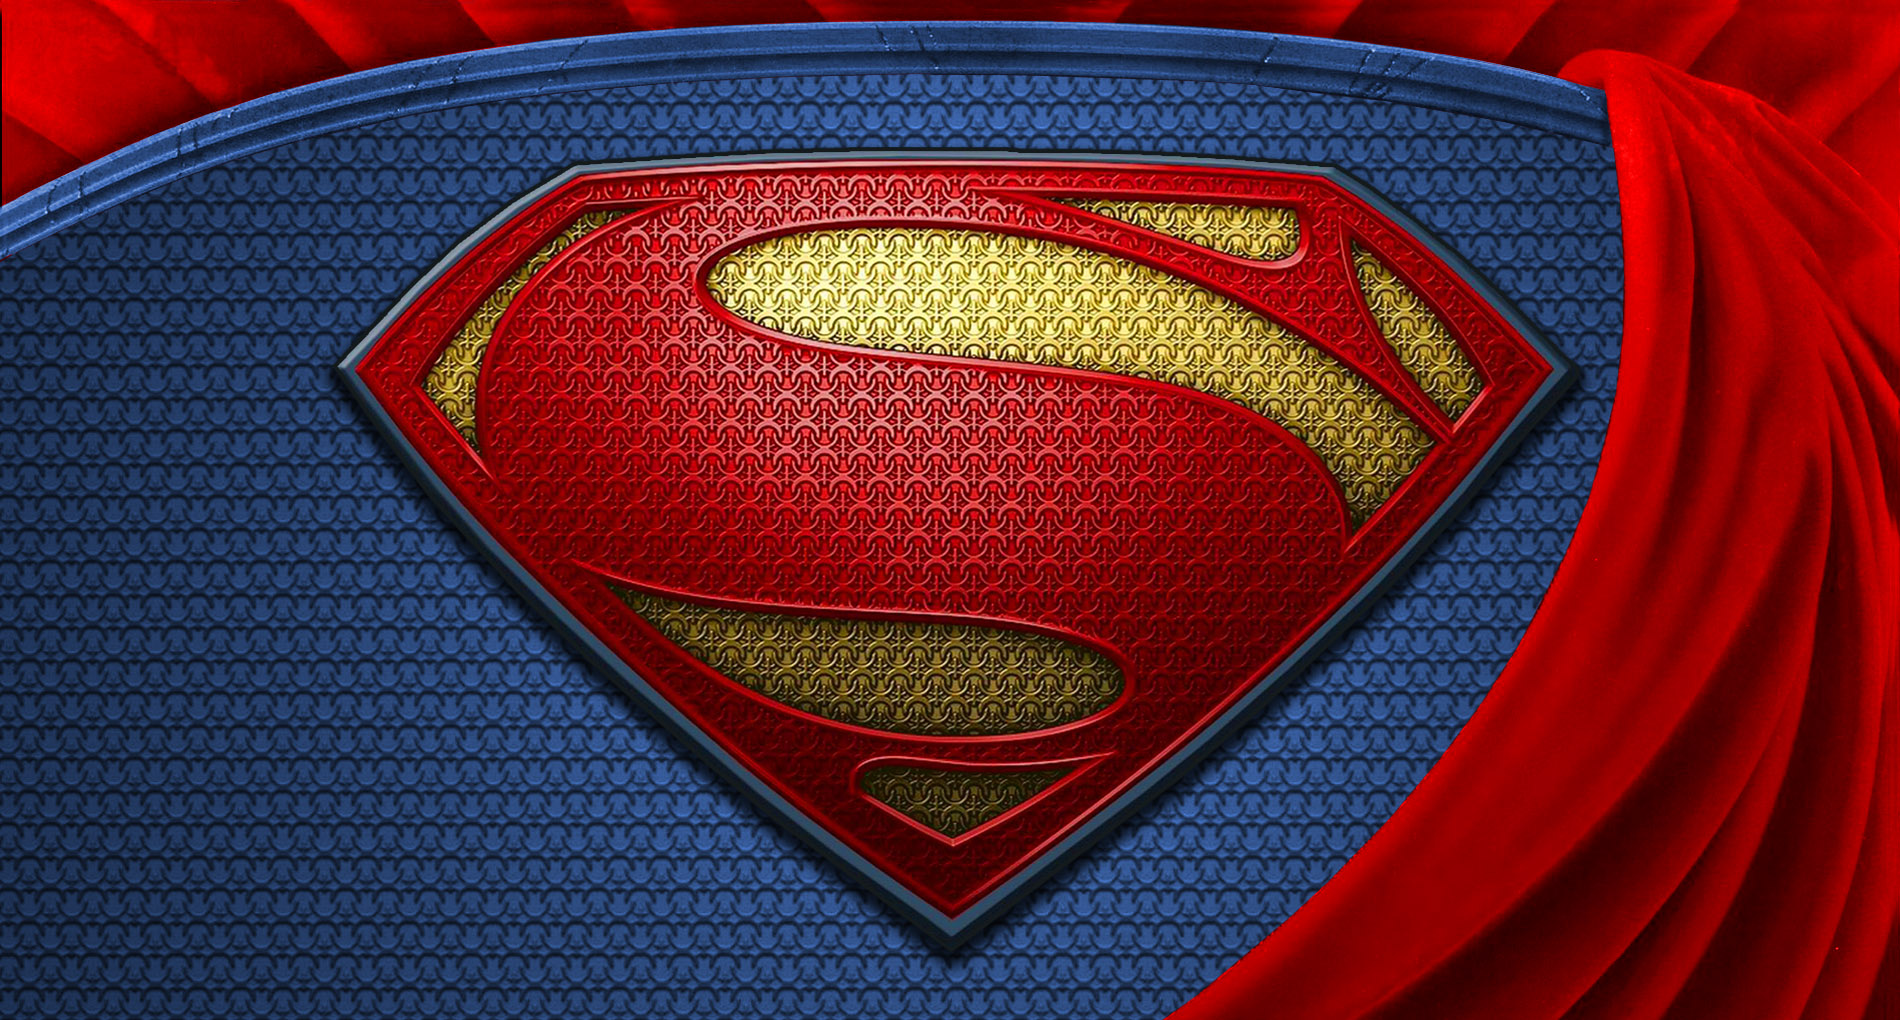 Superman Man Of Steel Wallpapers